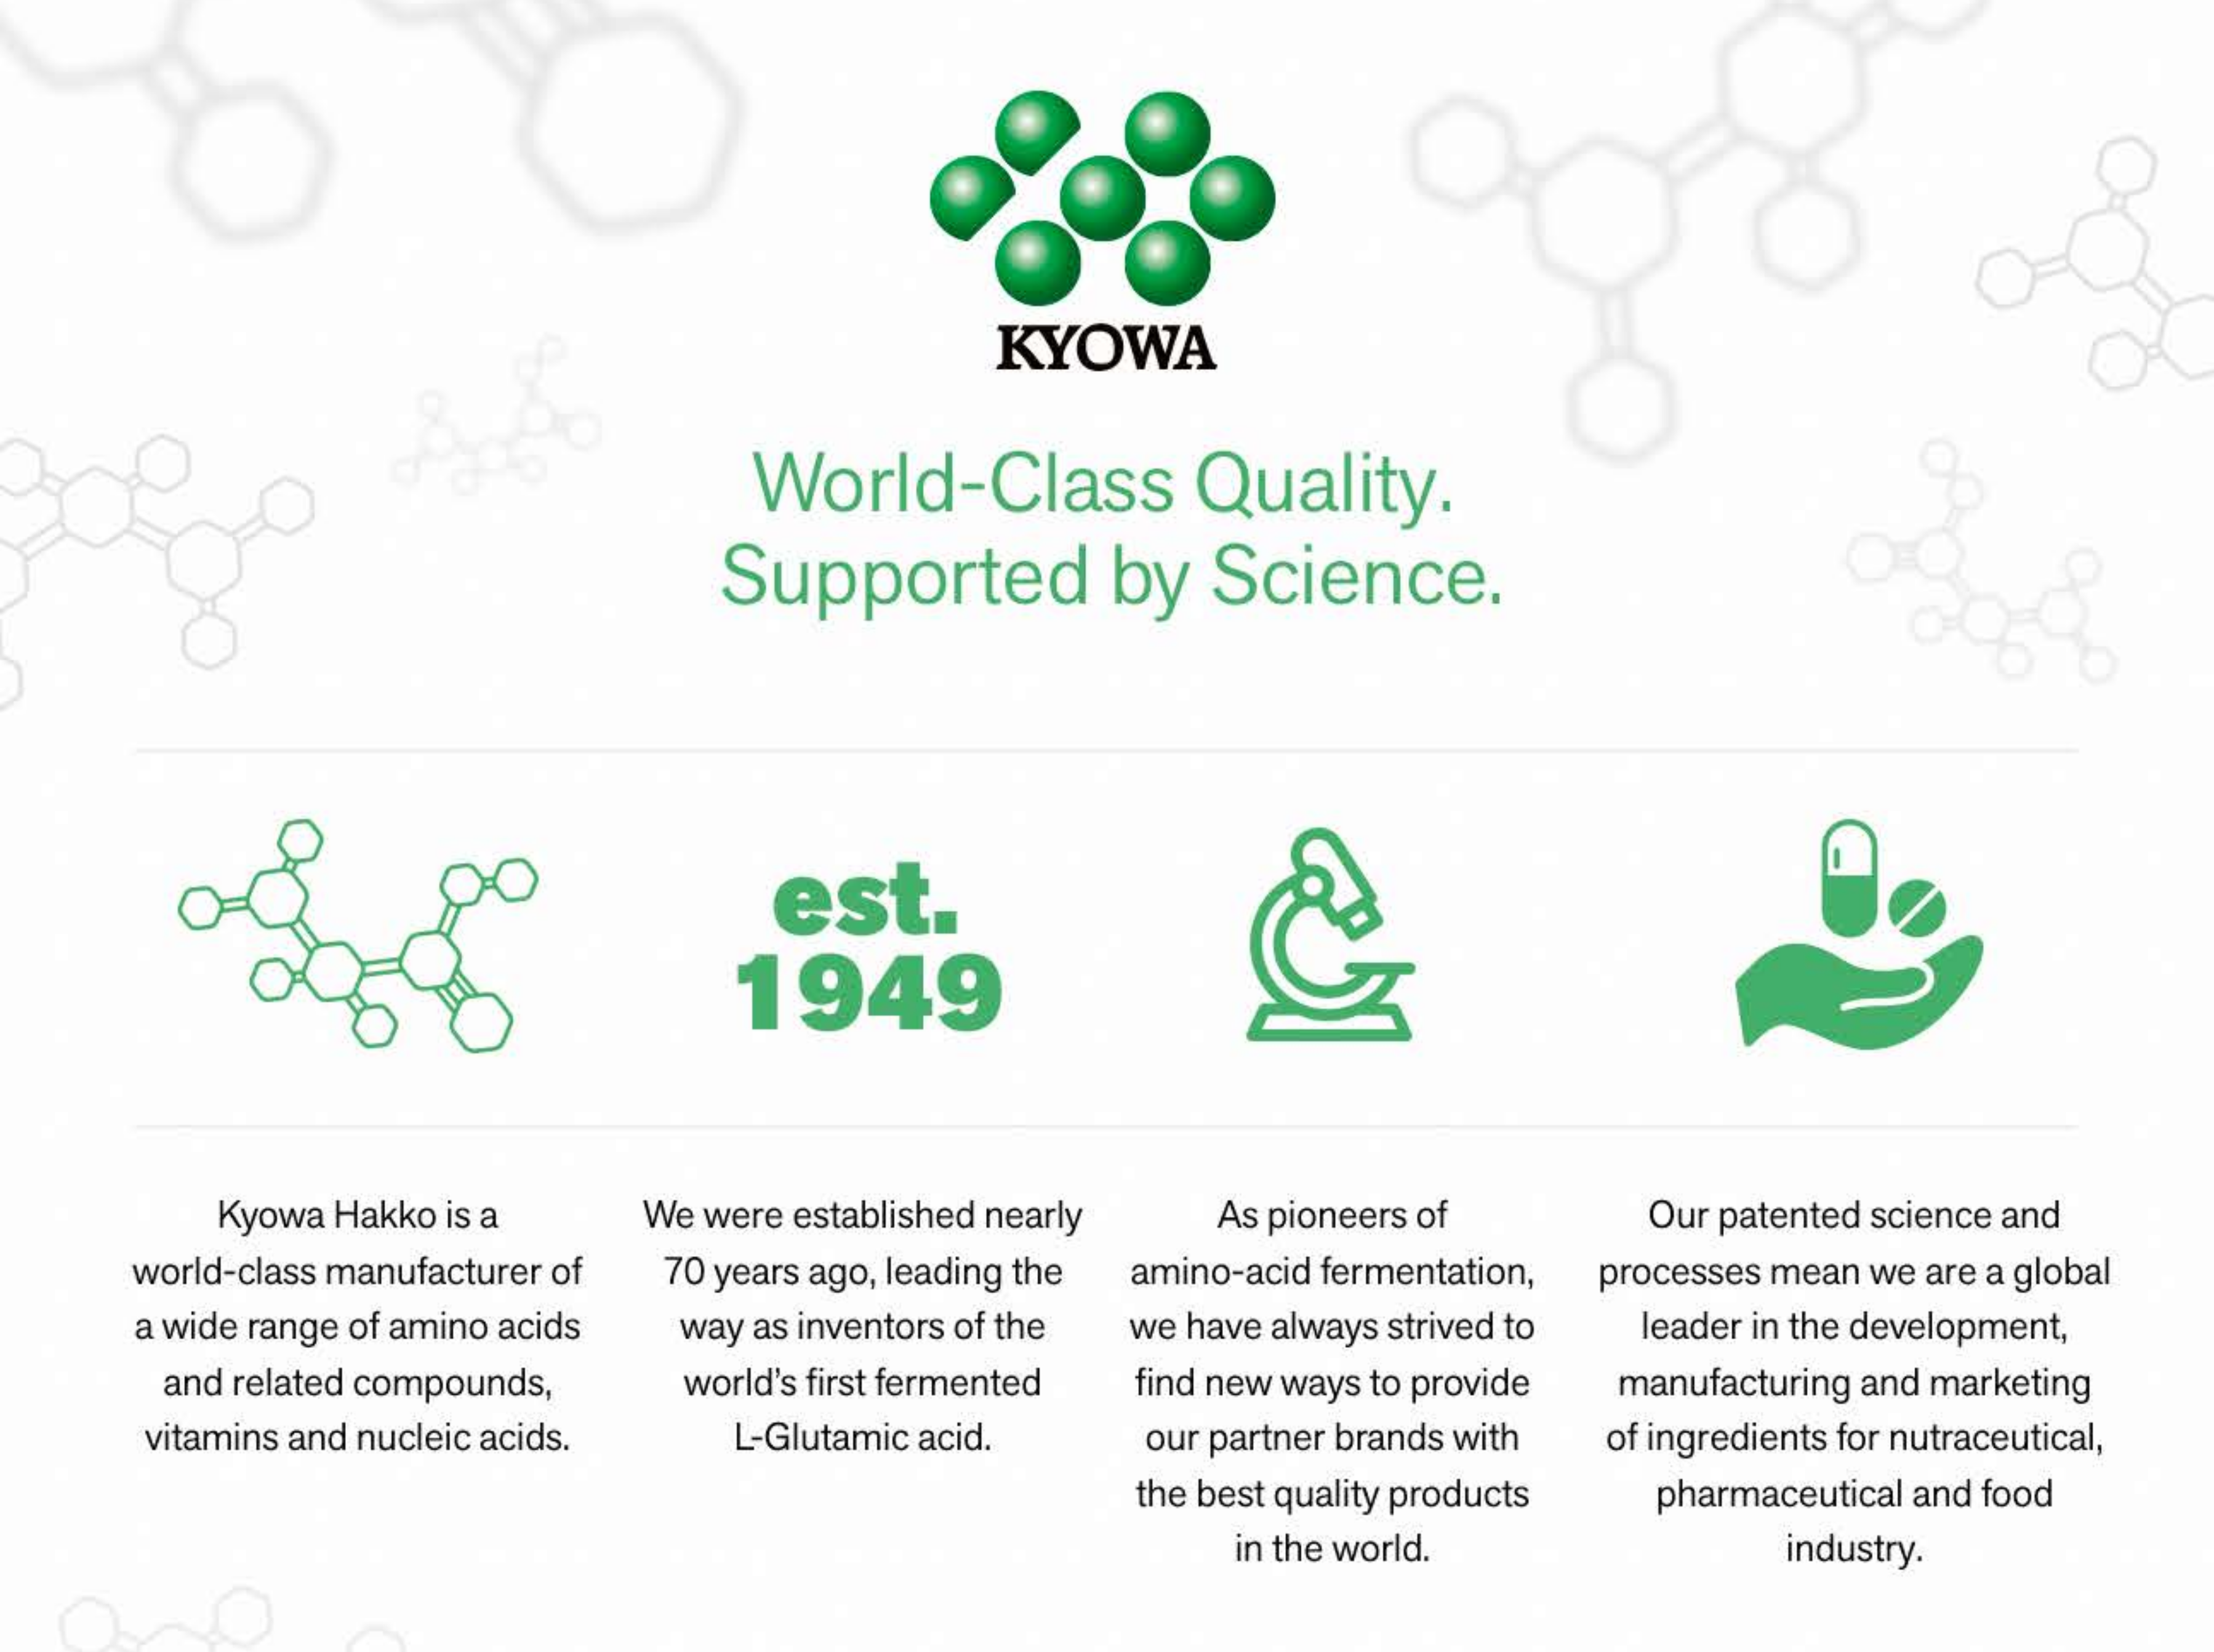 About Kyowa Quality